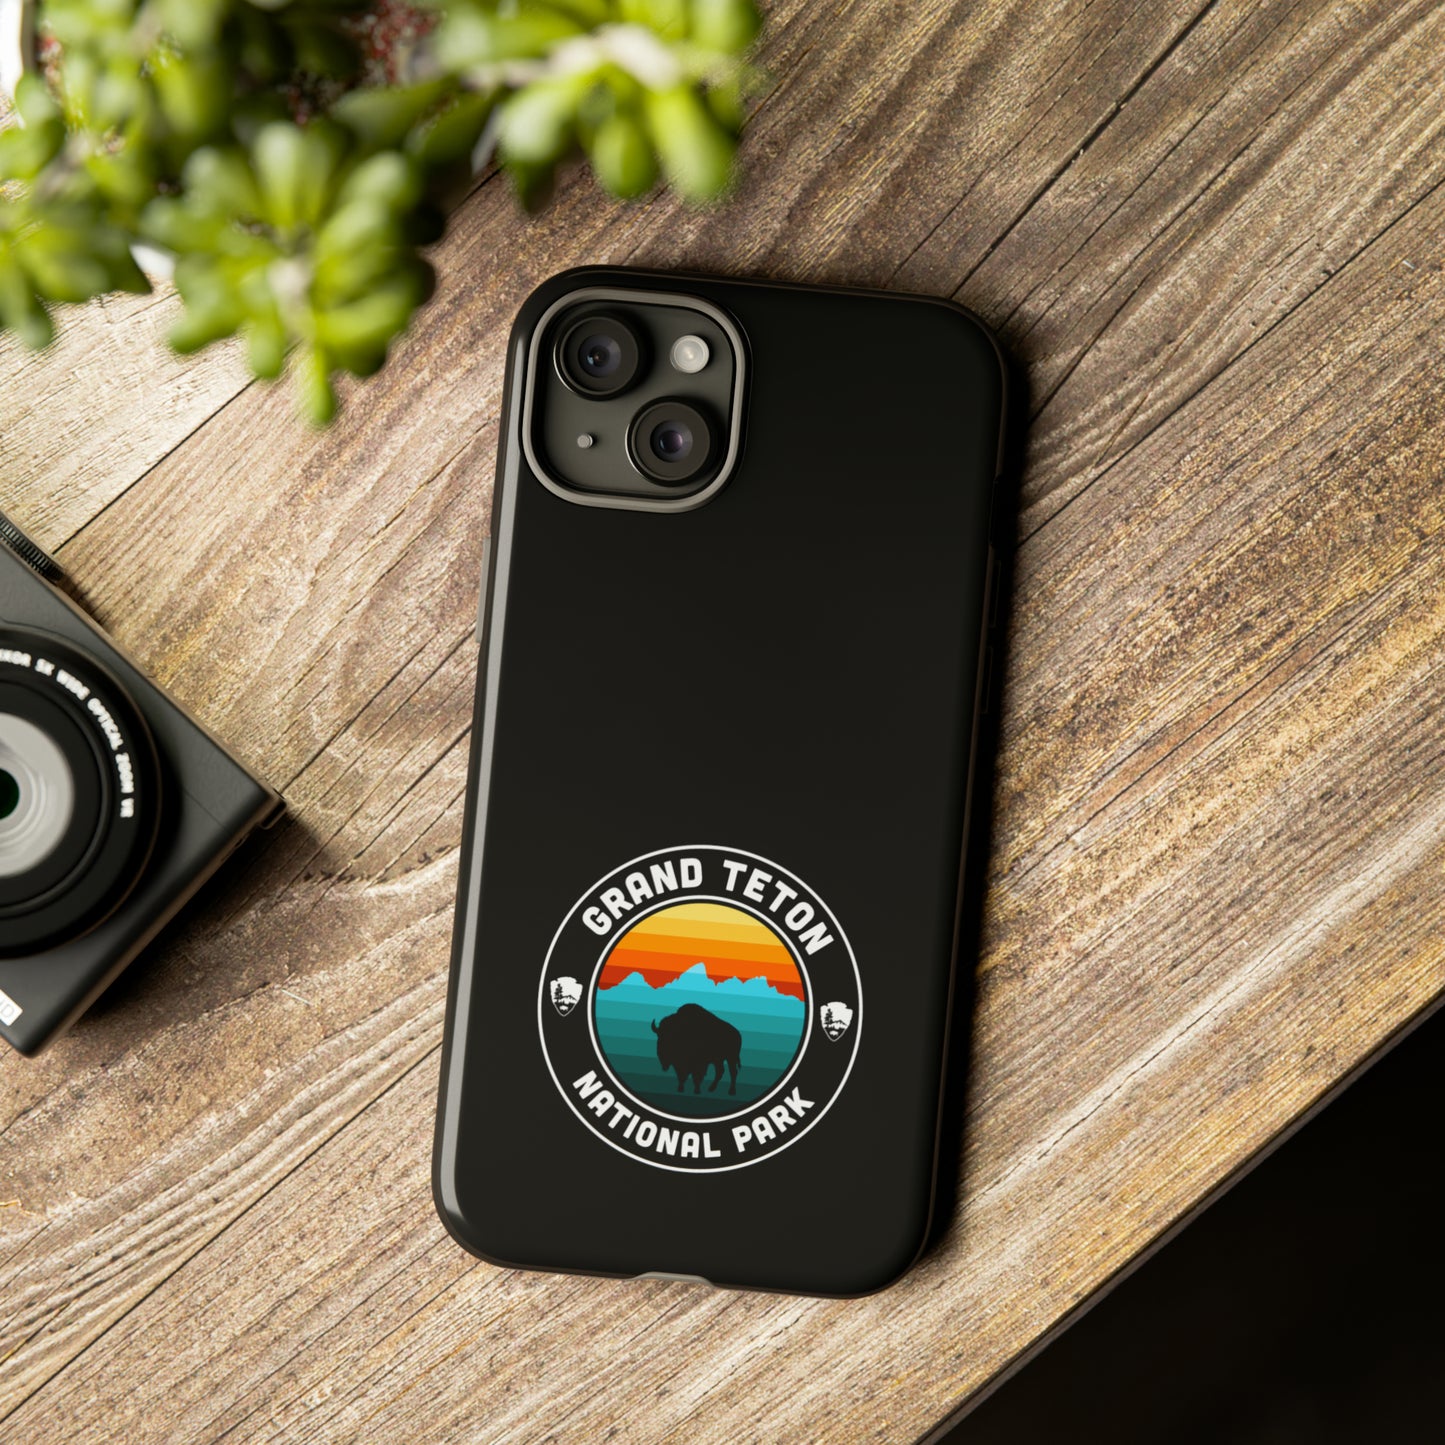 Grand Teton National Park Phone Case - Round Emblem Design